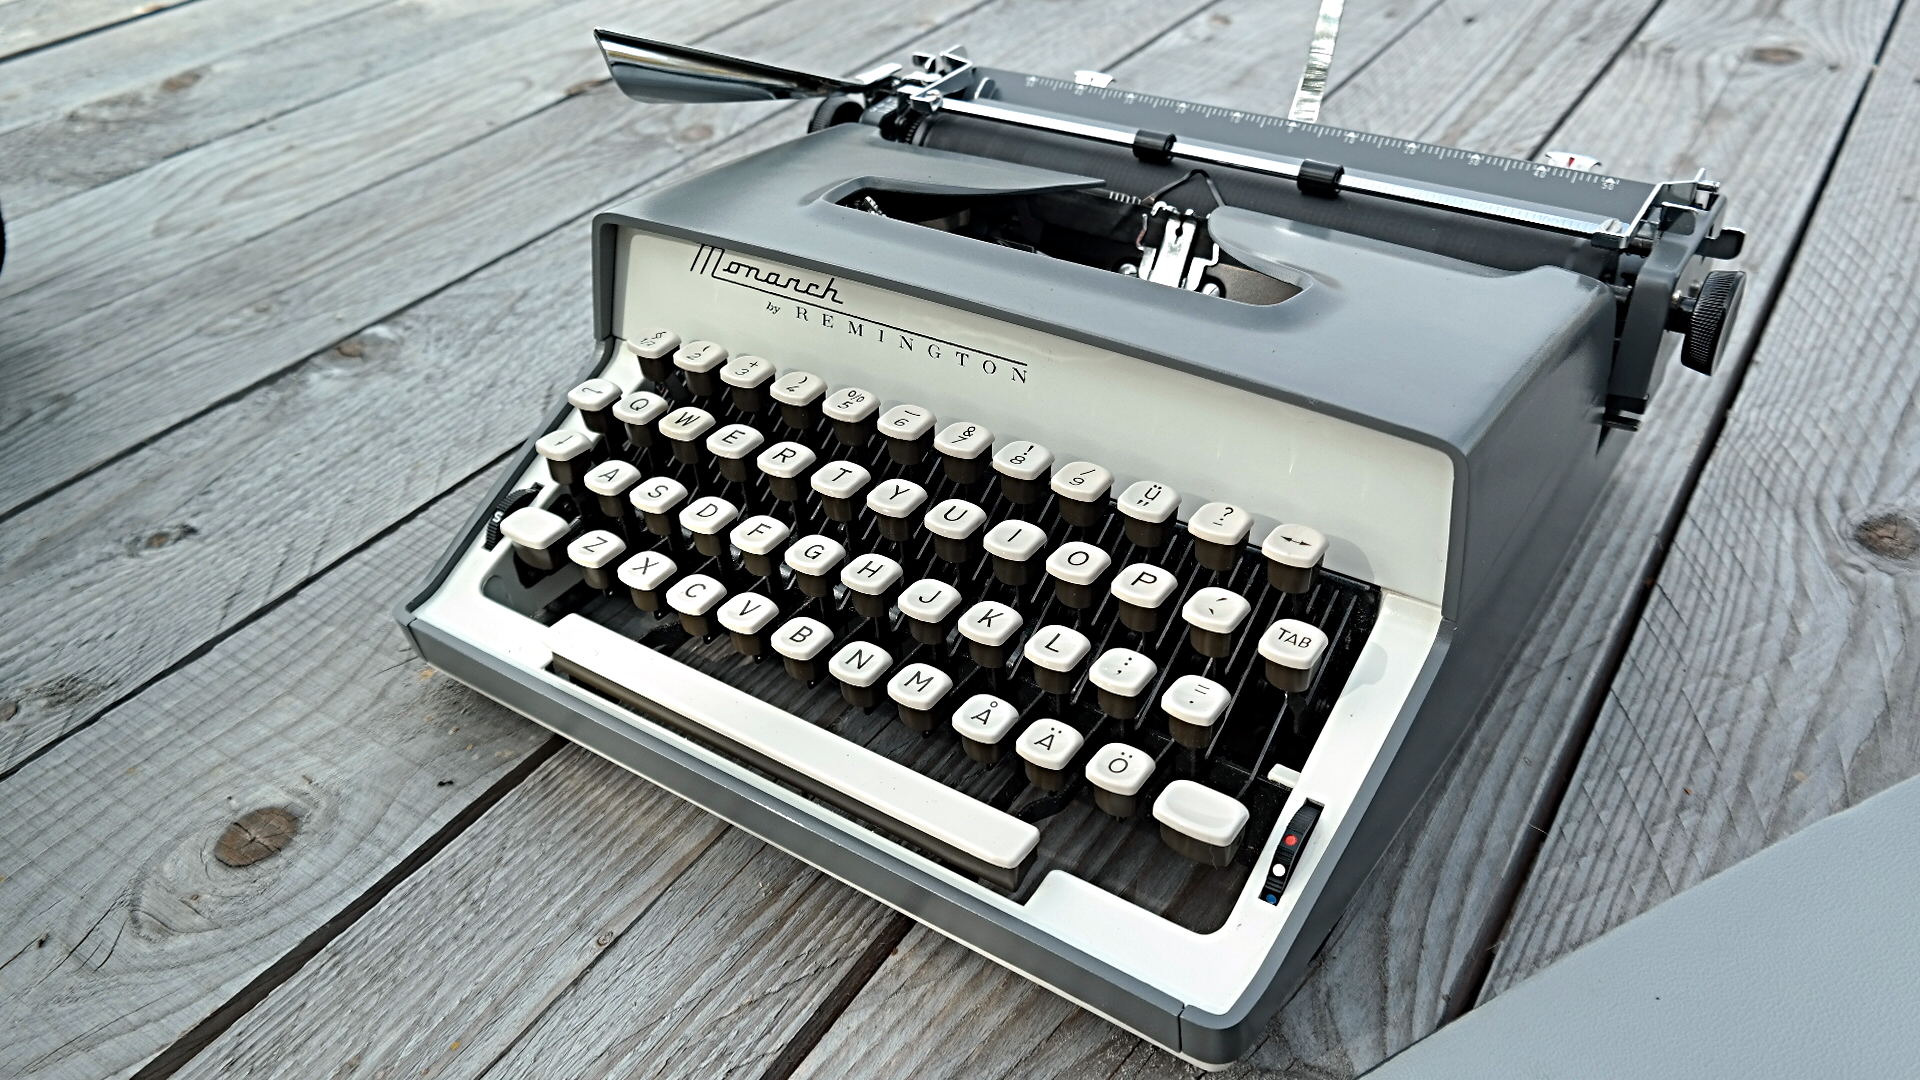 Remington Monarch Portable Typewriter / working typewriter for sale + Original case & key QWERTY made in Holland